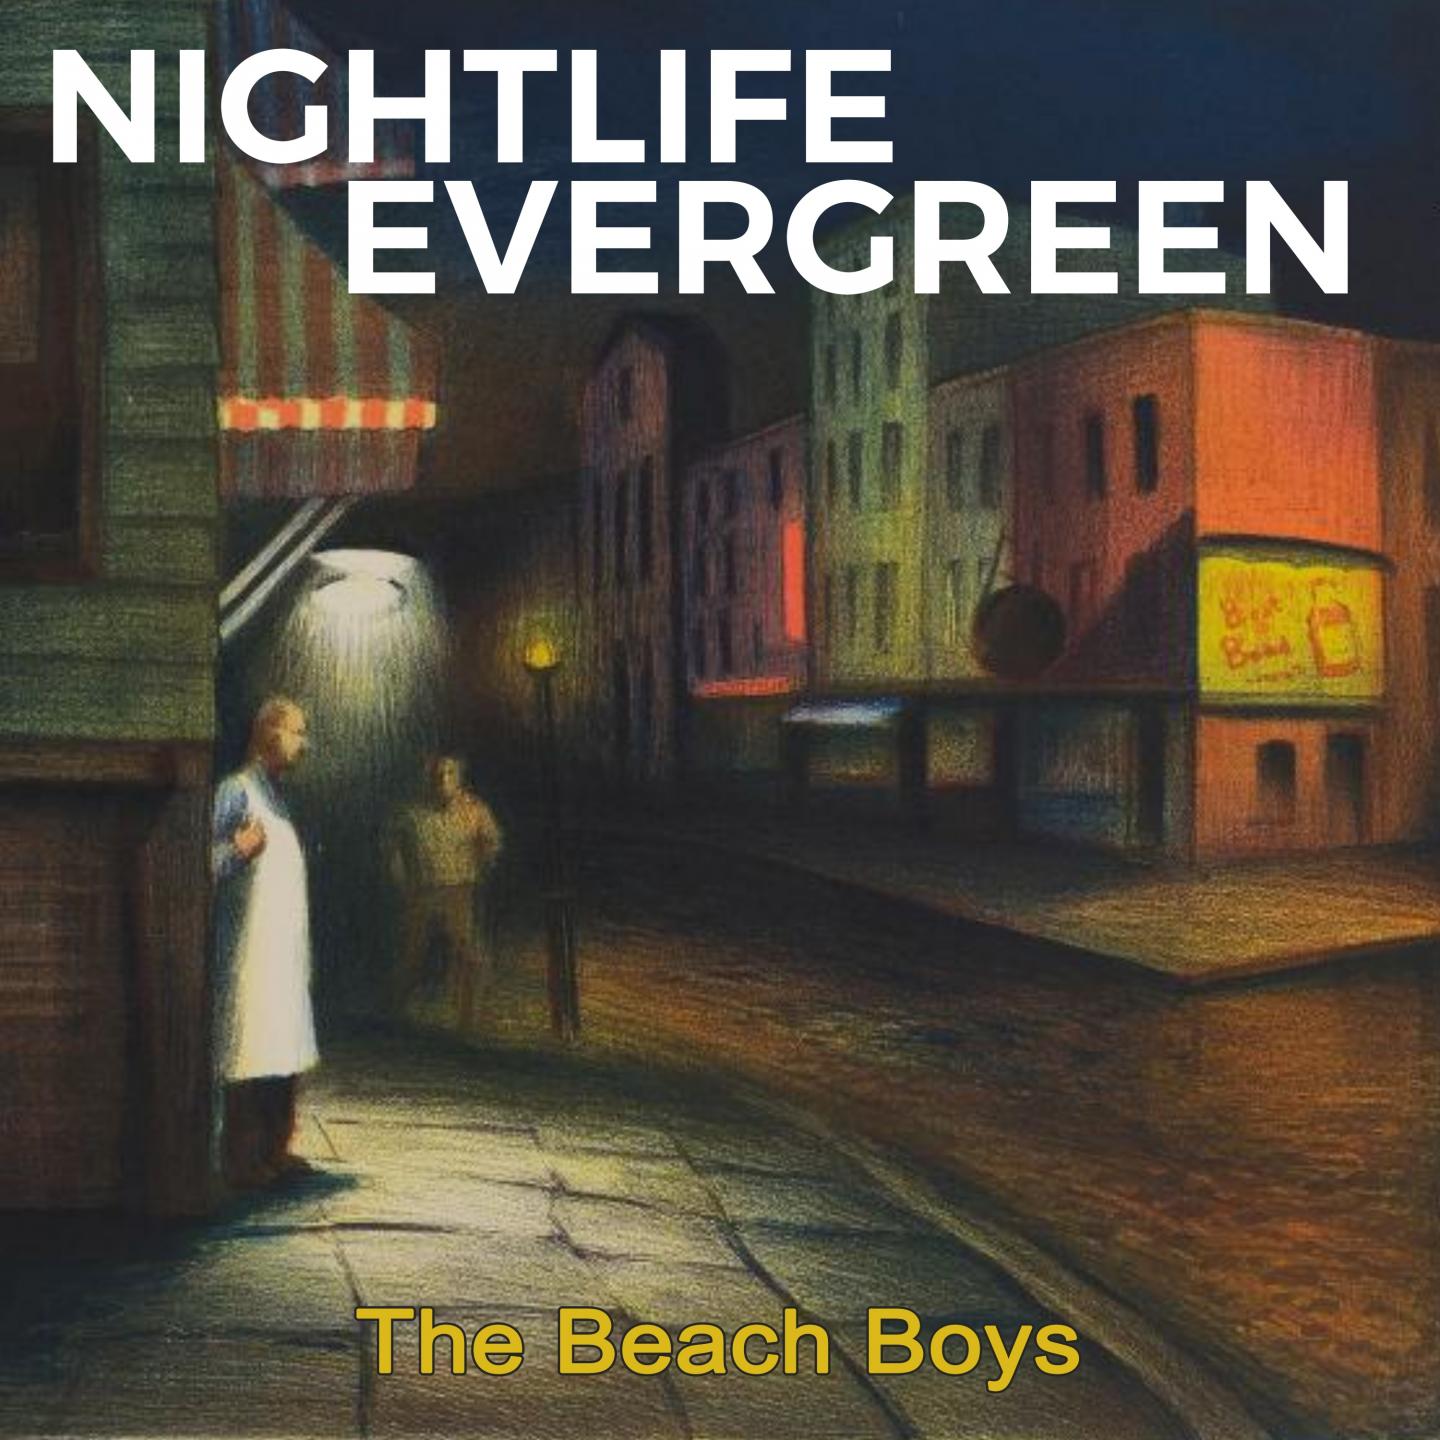 Don't Worry Baby歌词 歌手The Beach Boys-专辑Nightlife Evergreen-单曲《Don't Worry Baby》LRC歌词下载